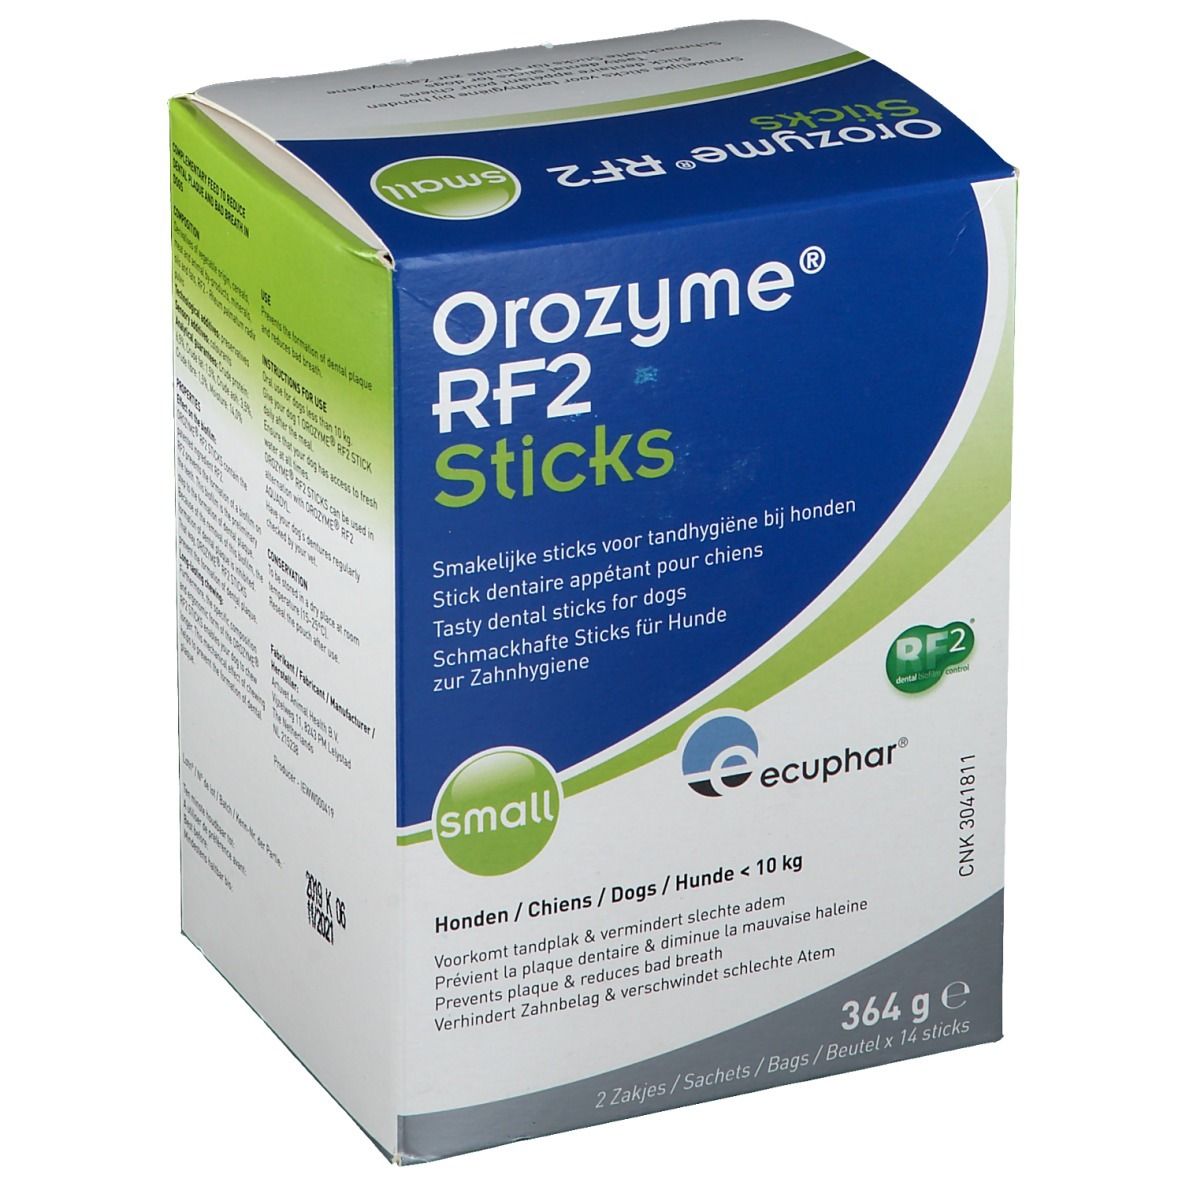 Orozyme® RF2 Sticks Small < 10 kg